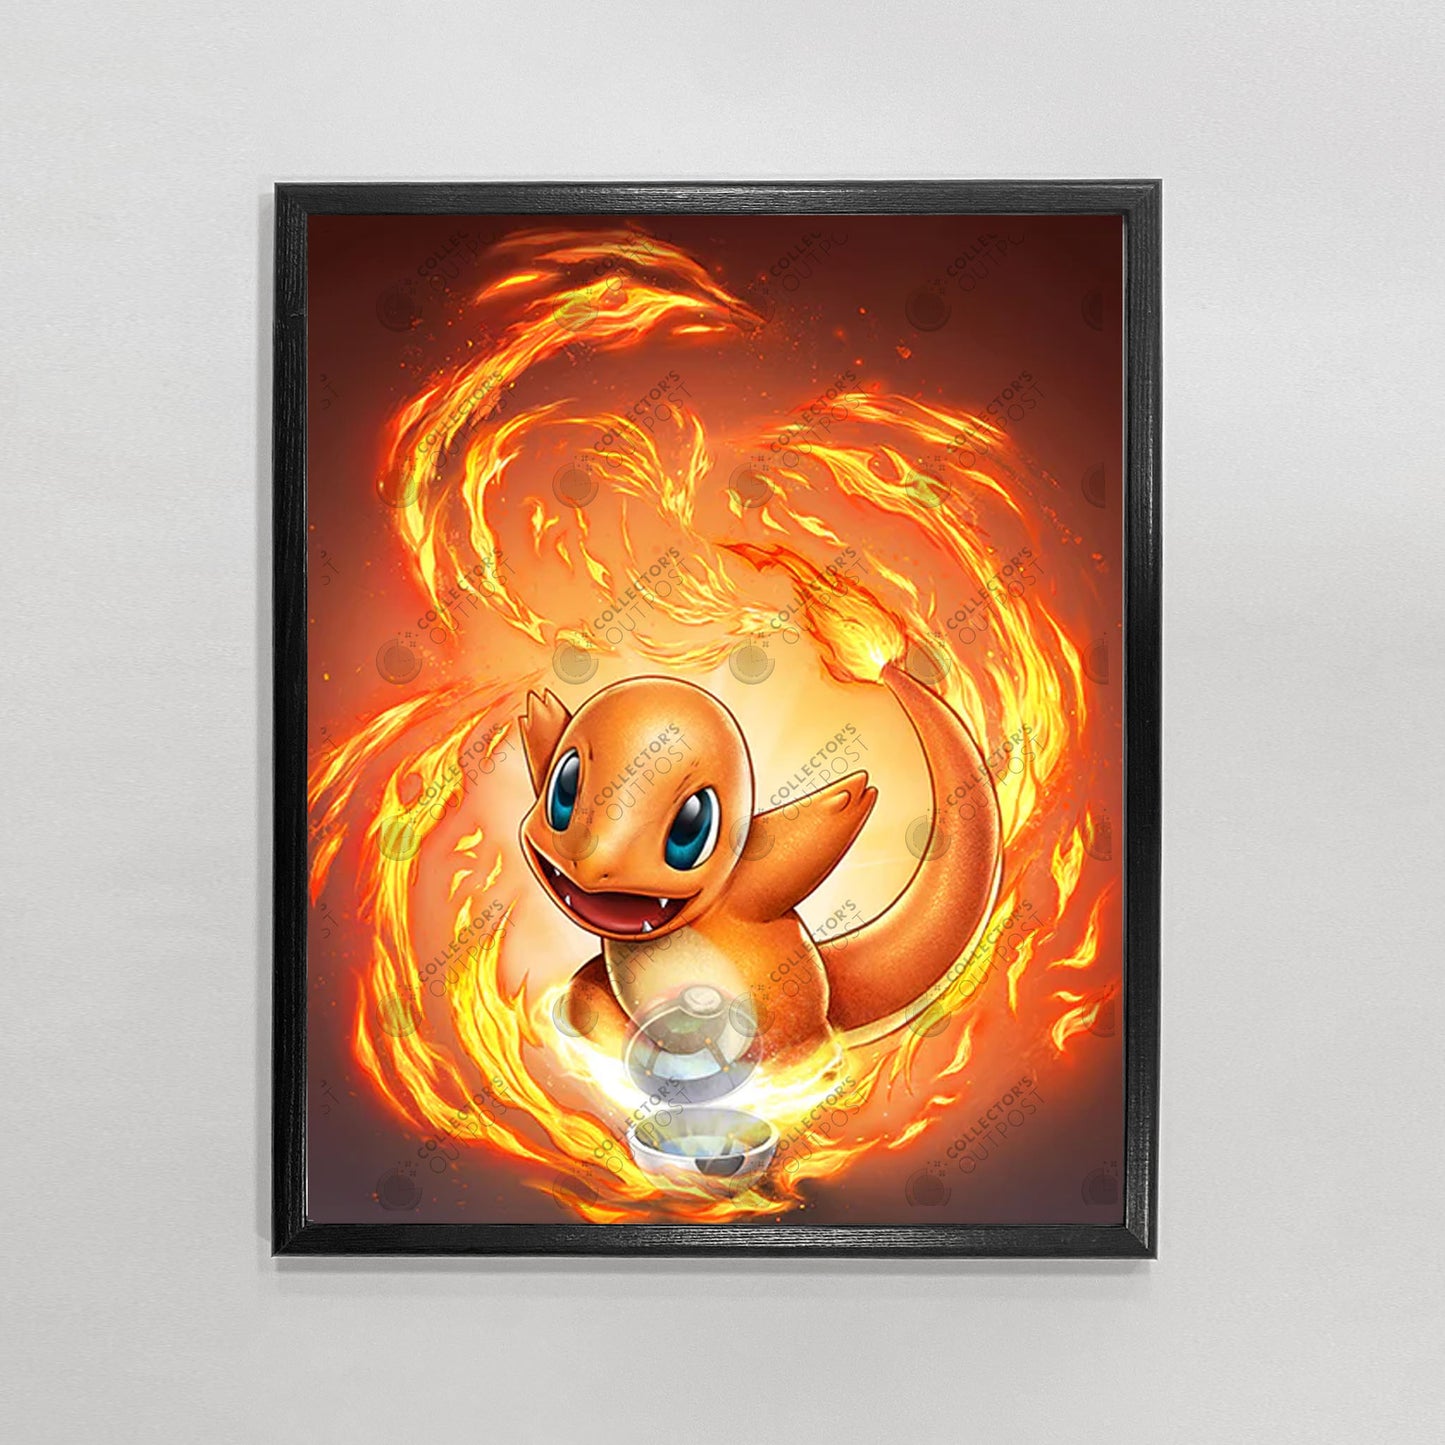 Scary Pokemon Art Prints for Sale